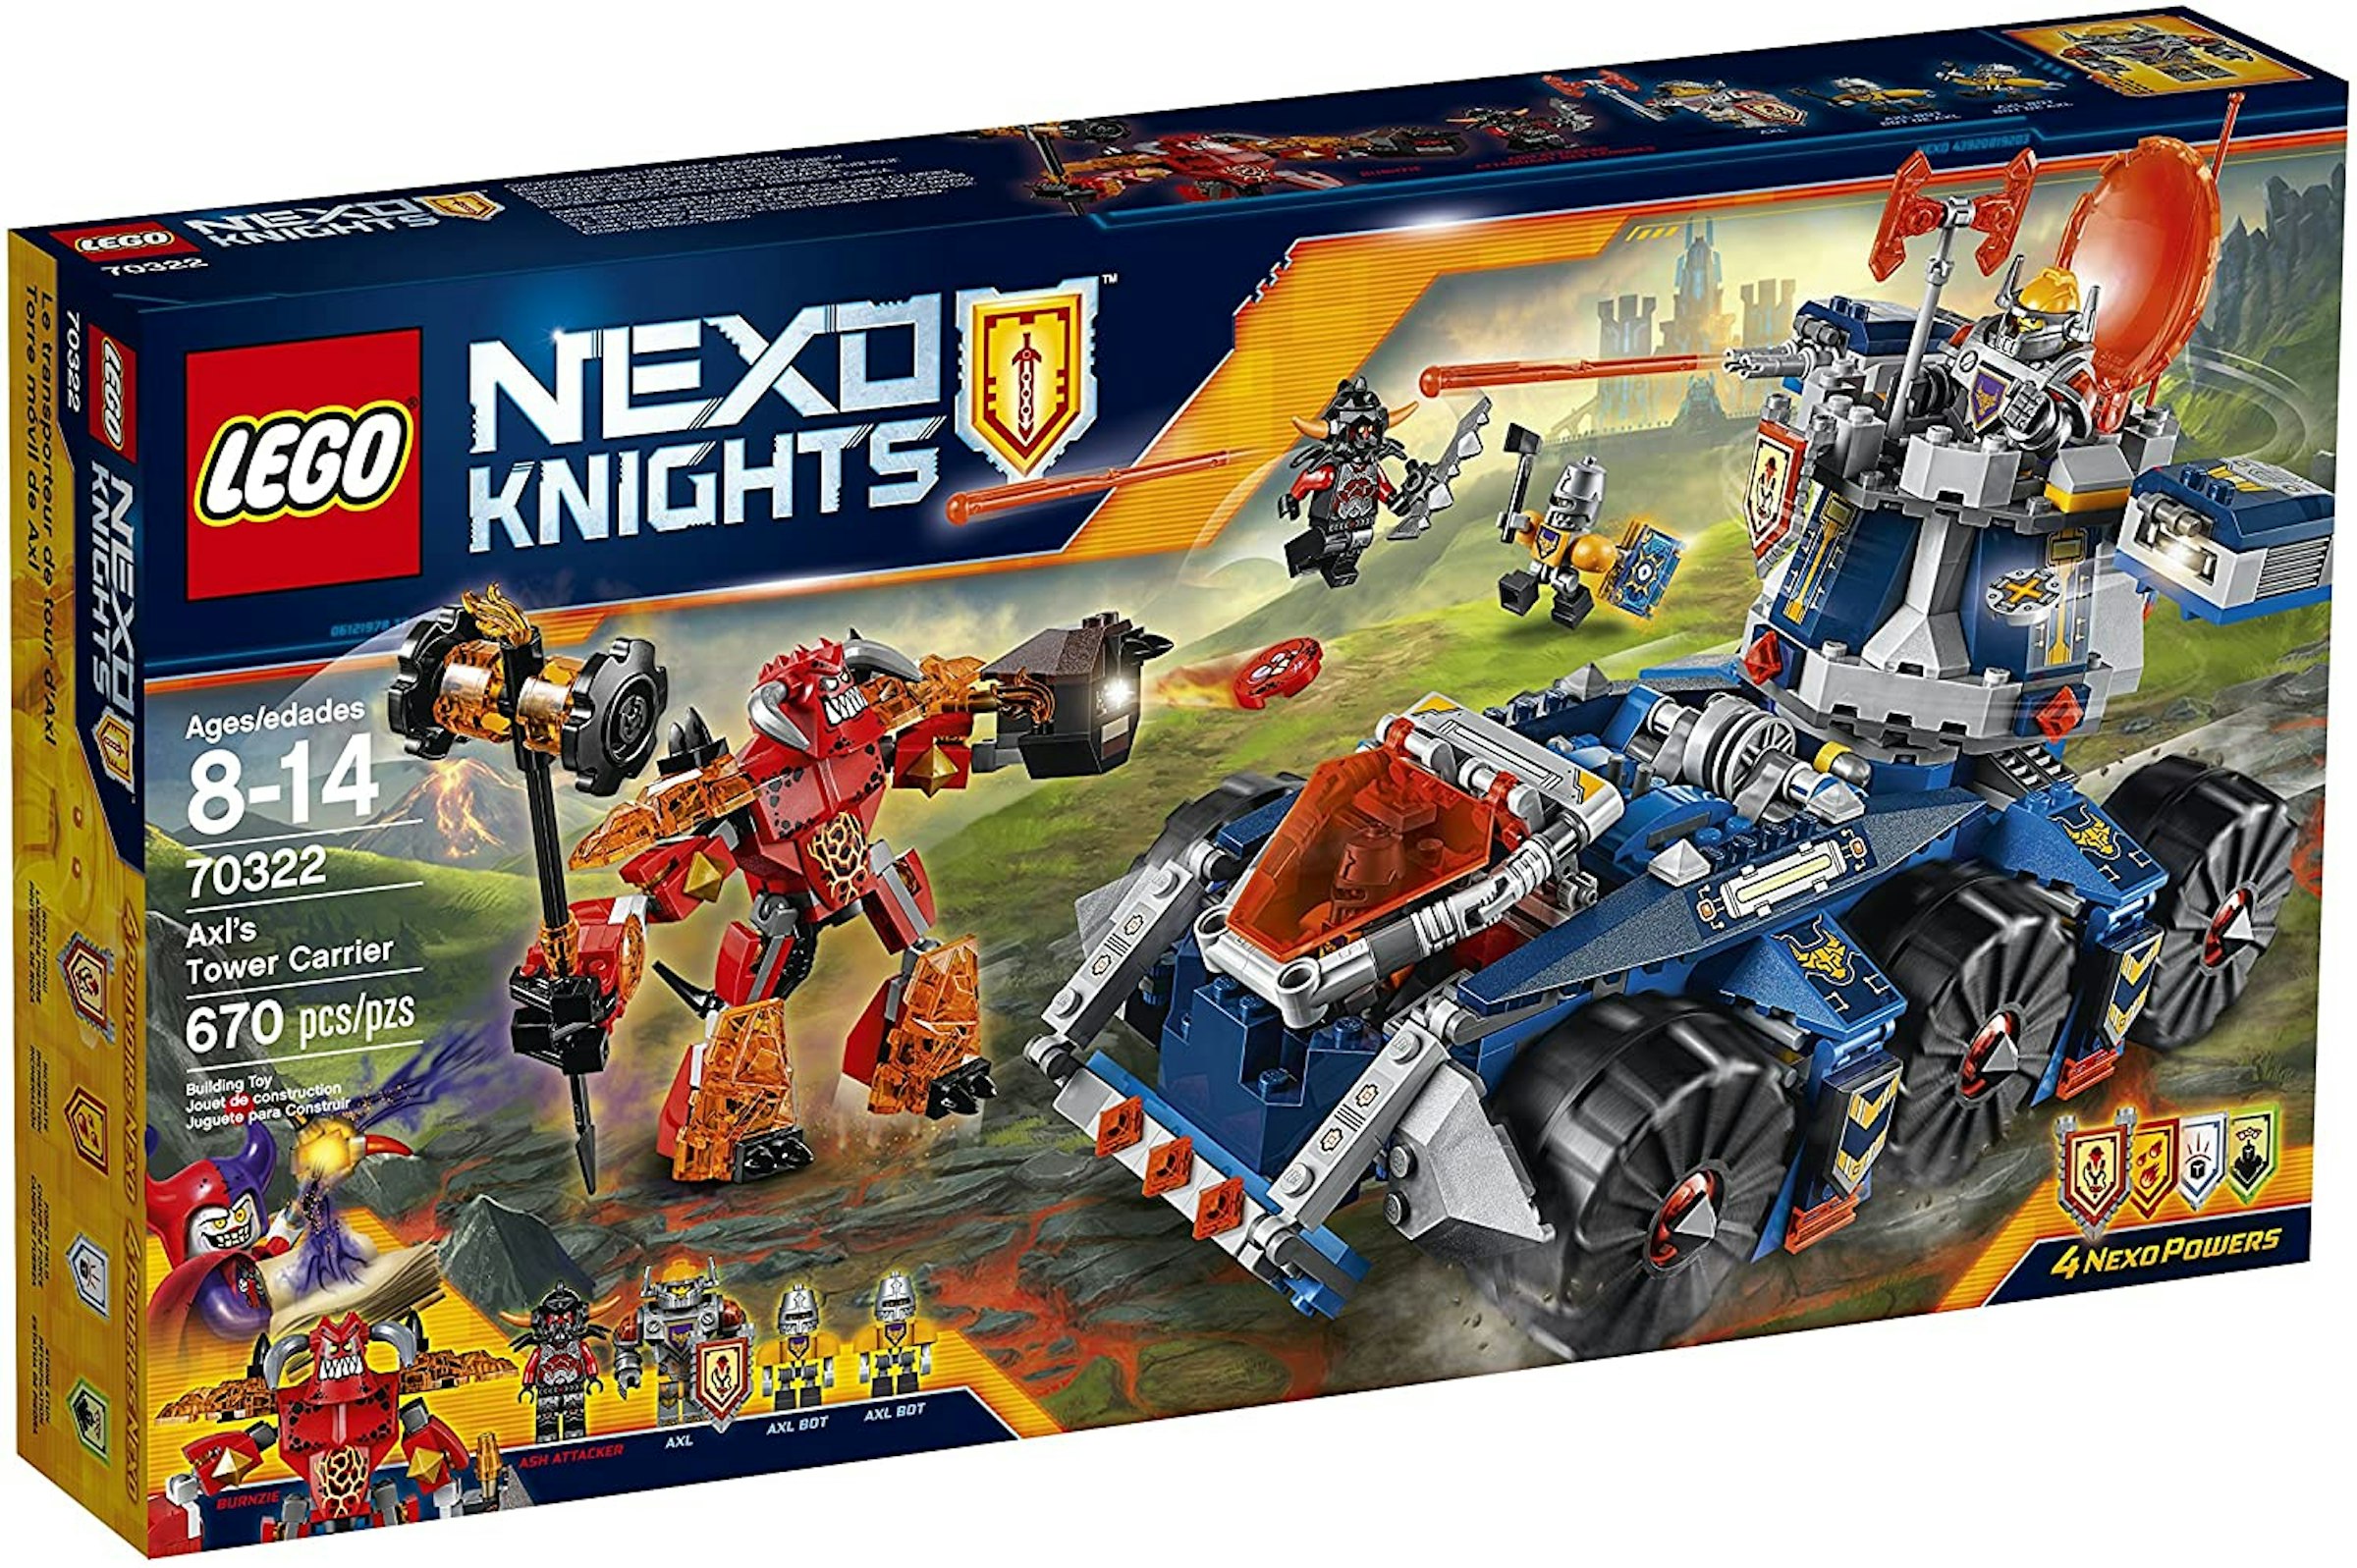 LEGO Nexo Knights Axl's Carrier Set 70322 - US